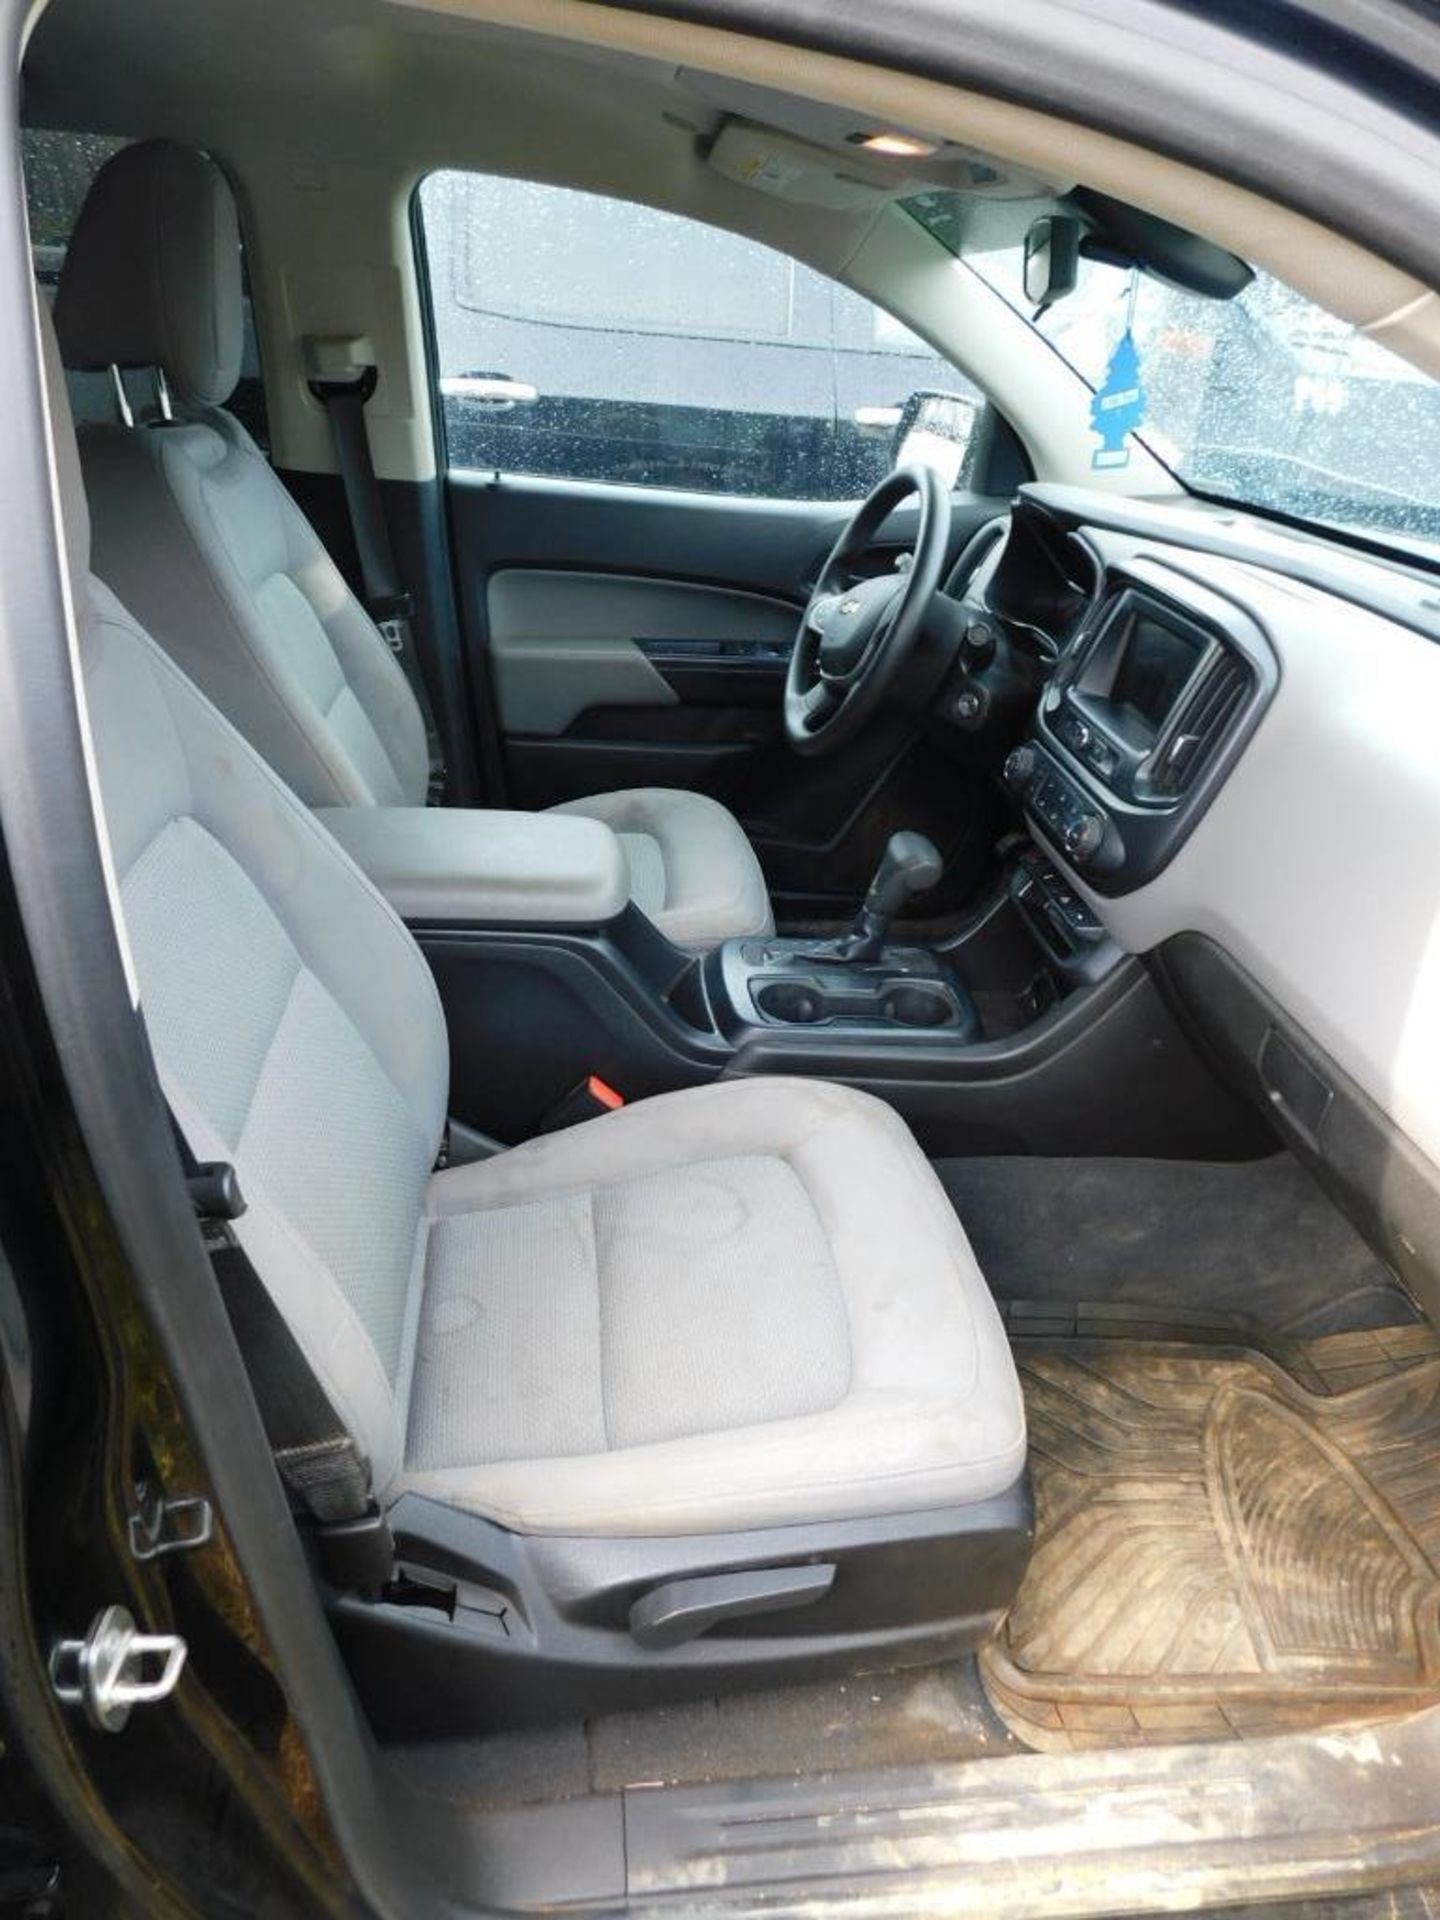 2019 Chevy Colorado Crew Cab, 4-Wheel Drive, 3.6 Liter, V6, Gasoline Motor, Auto, 5' Bed, 87,741 Mil - Image 8 of 11